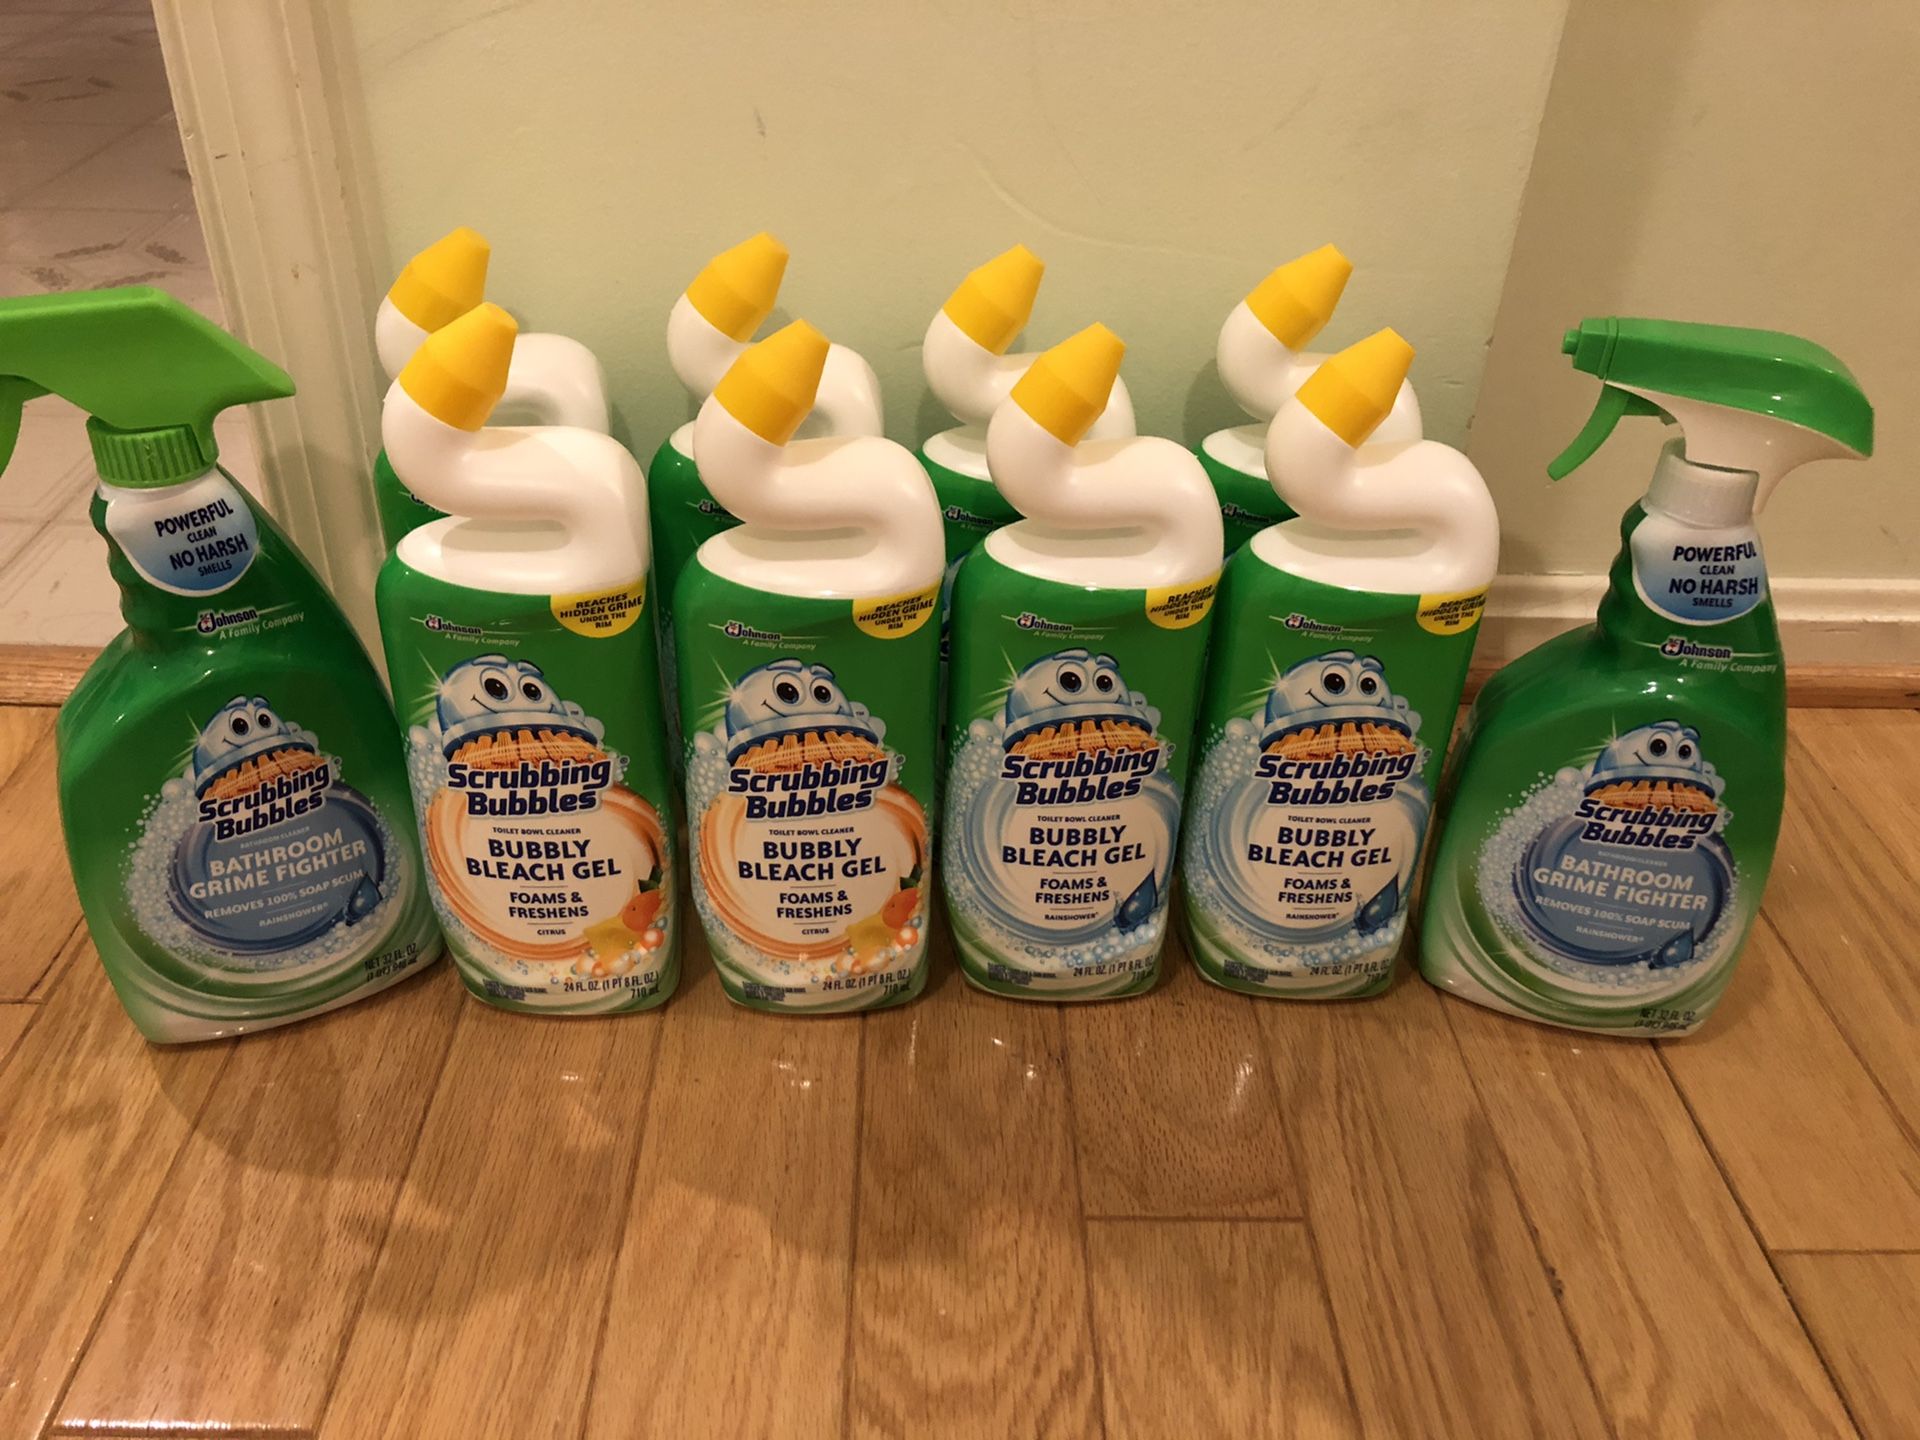 8 Scrubbing bubbles toilet bowl & 2 scrubbing bubbles bathroom cleaner